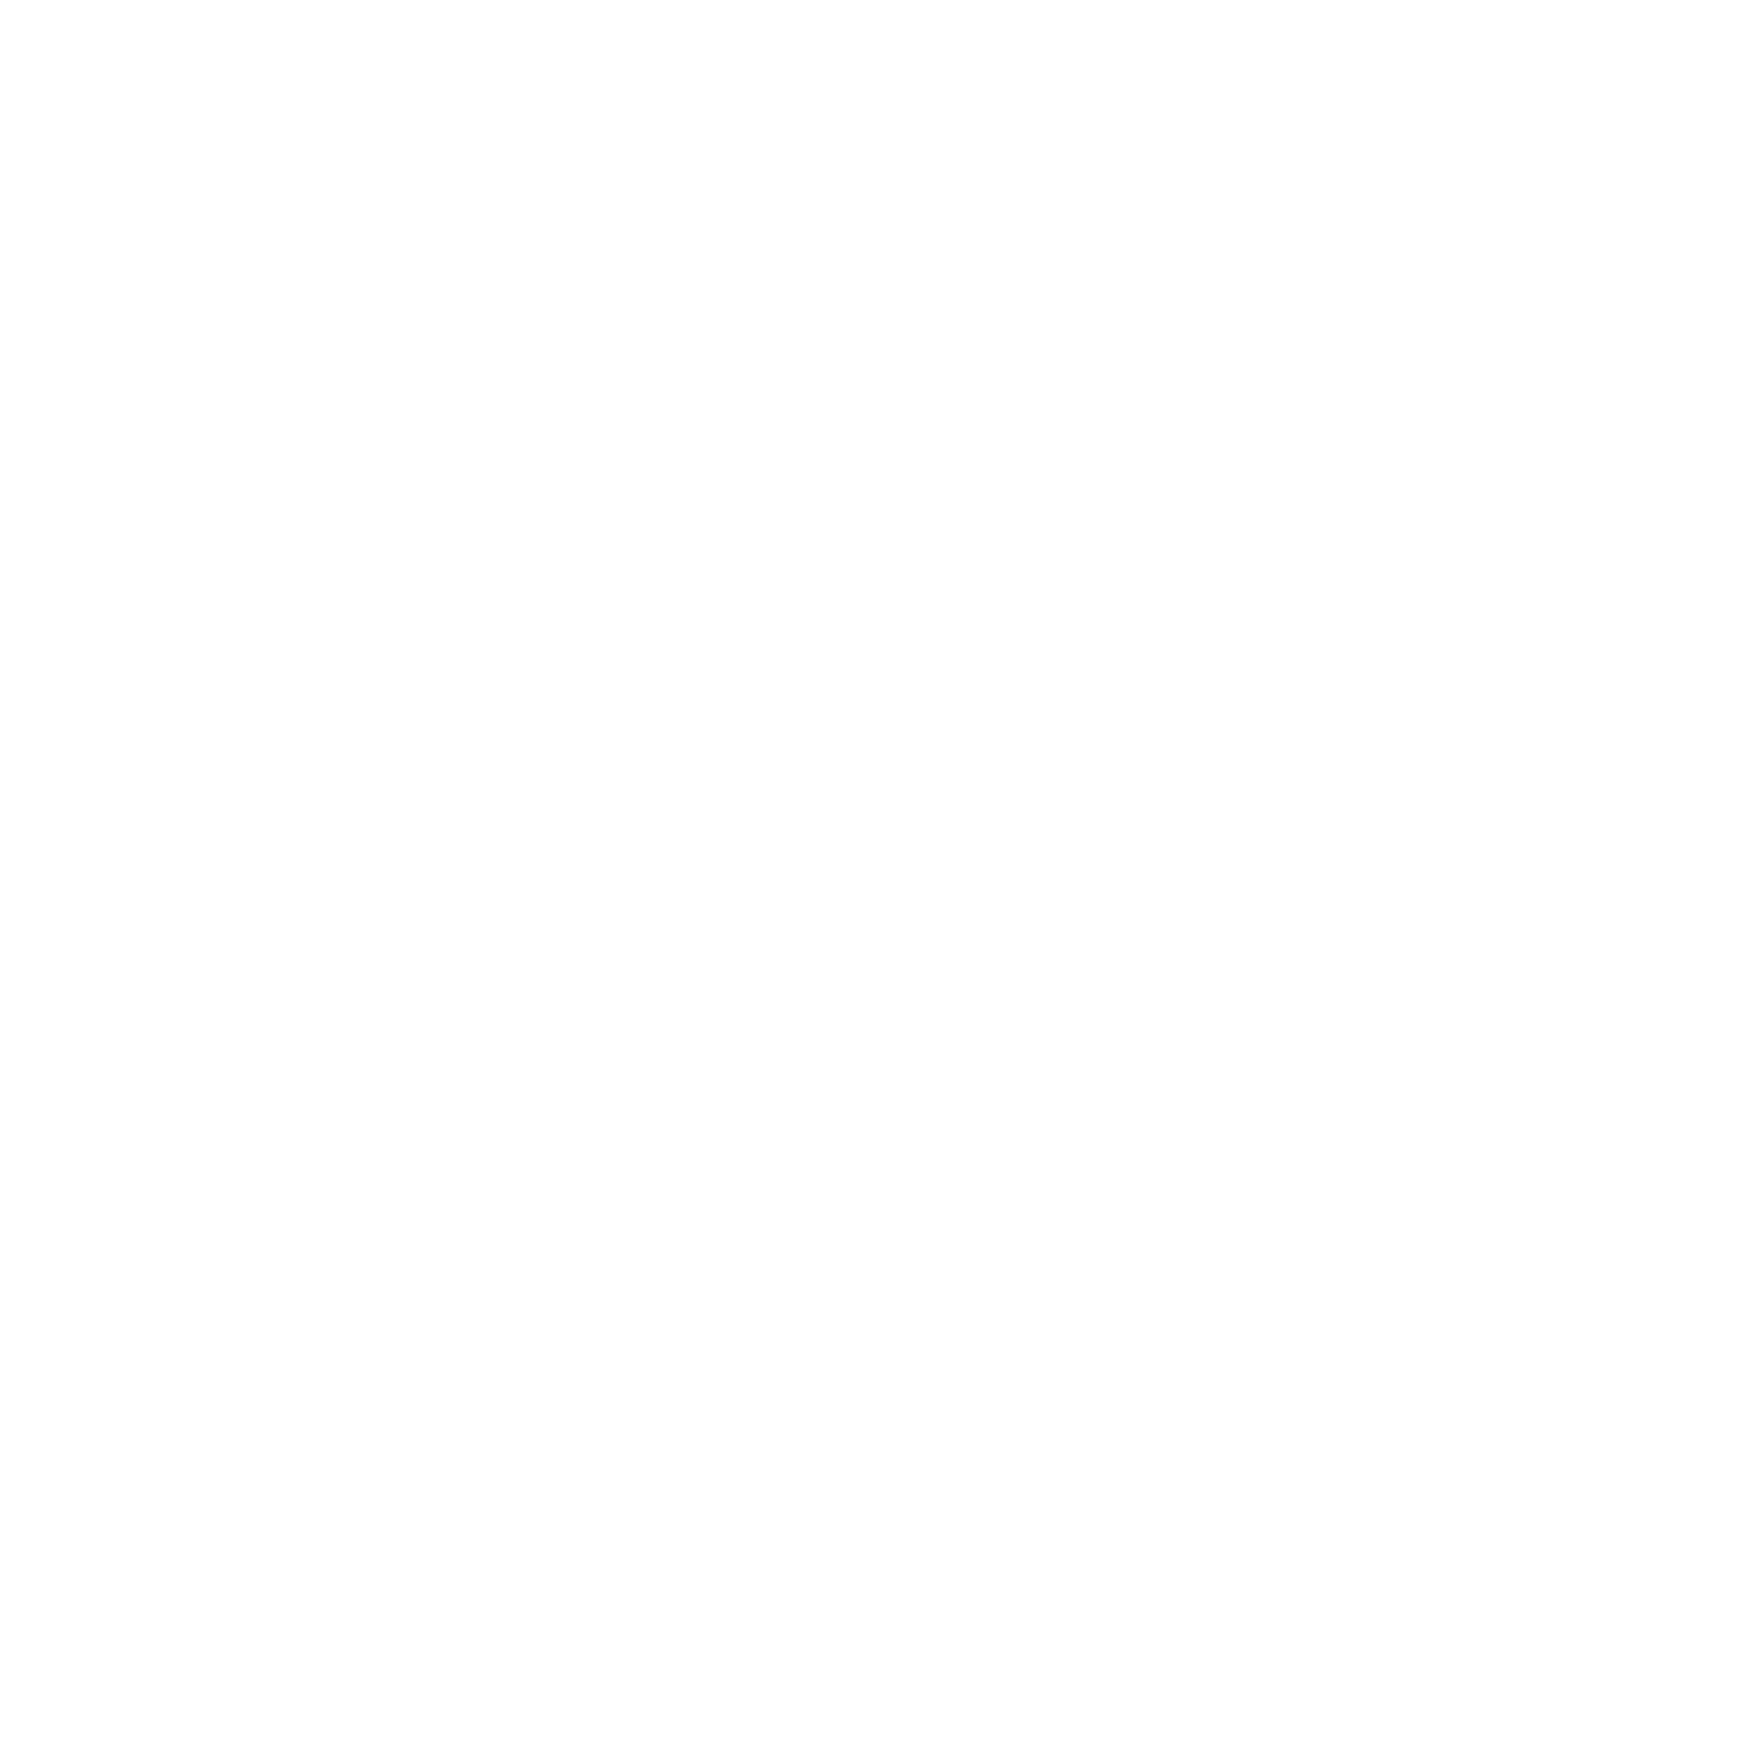 Rankings.io